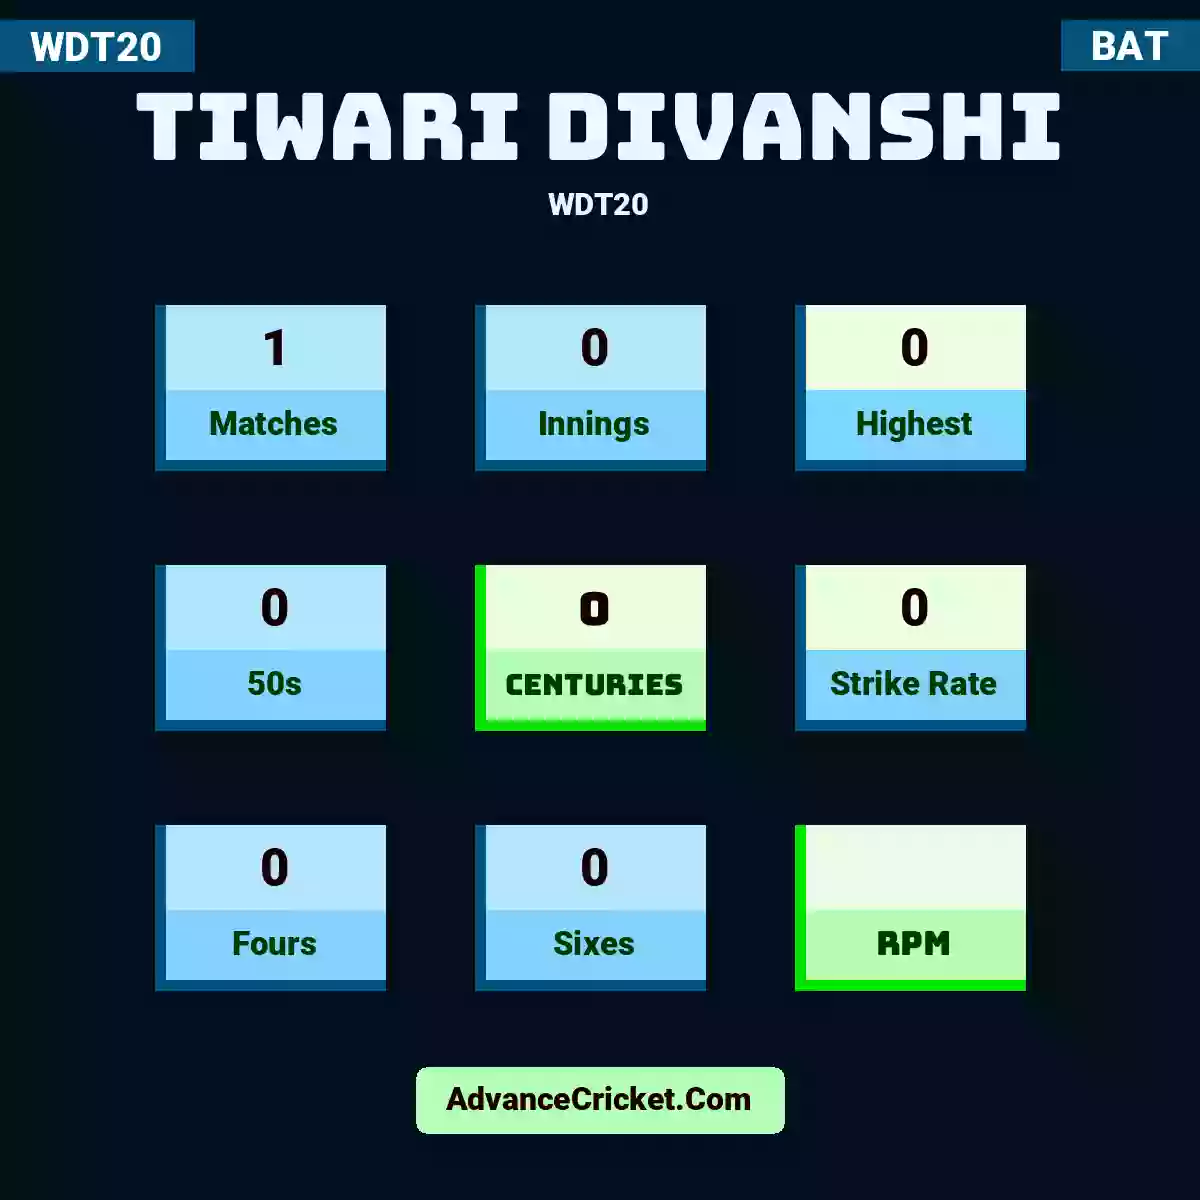 Tiwari Divanshi WDT20 , Tiwari Divanshi played 1 matches, scored 0 runs as highest, 0 half-centuries, and 0 centuries, with a strike rate of 0. T.Divanshi hit 0 fours and 0 sixes.